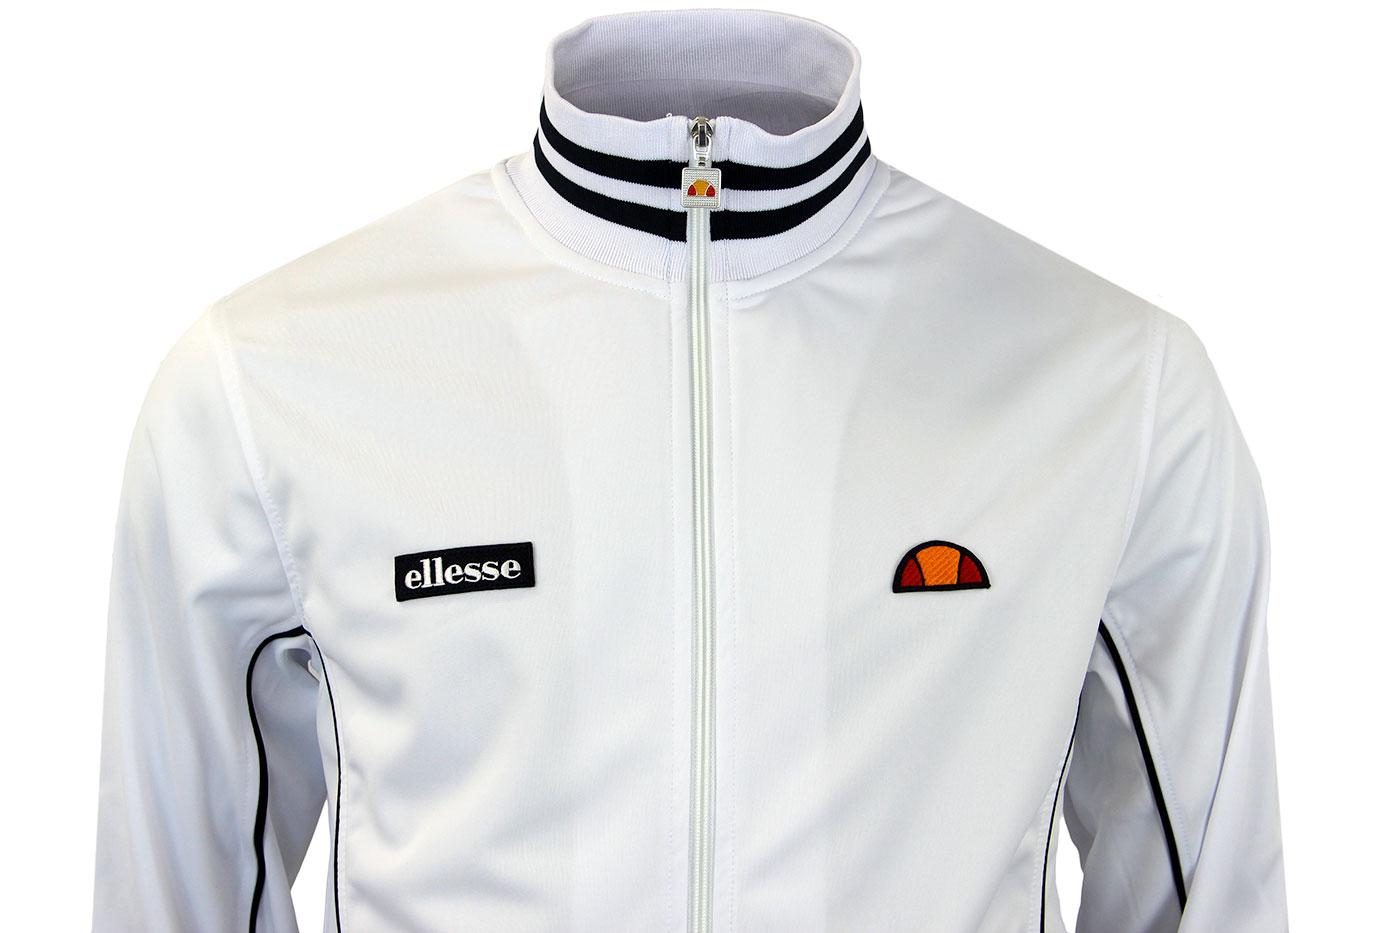 ELLESSE Milan 2 Retro 70s Funnel Neck Track Jacket in White